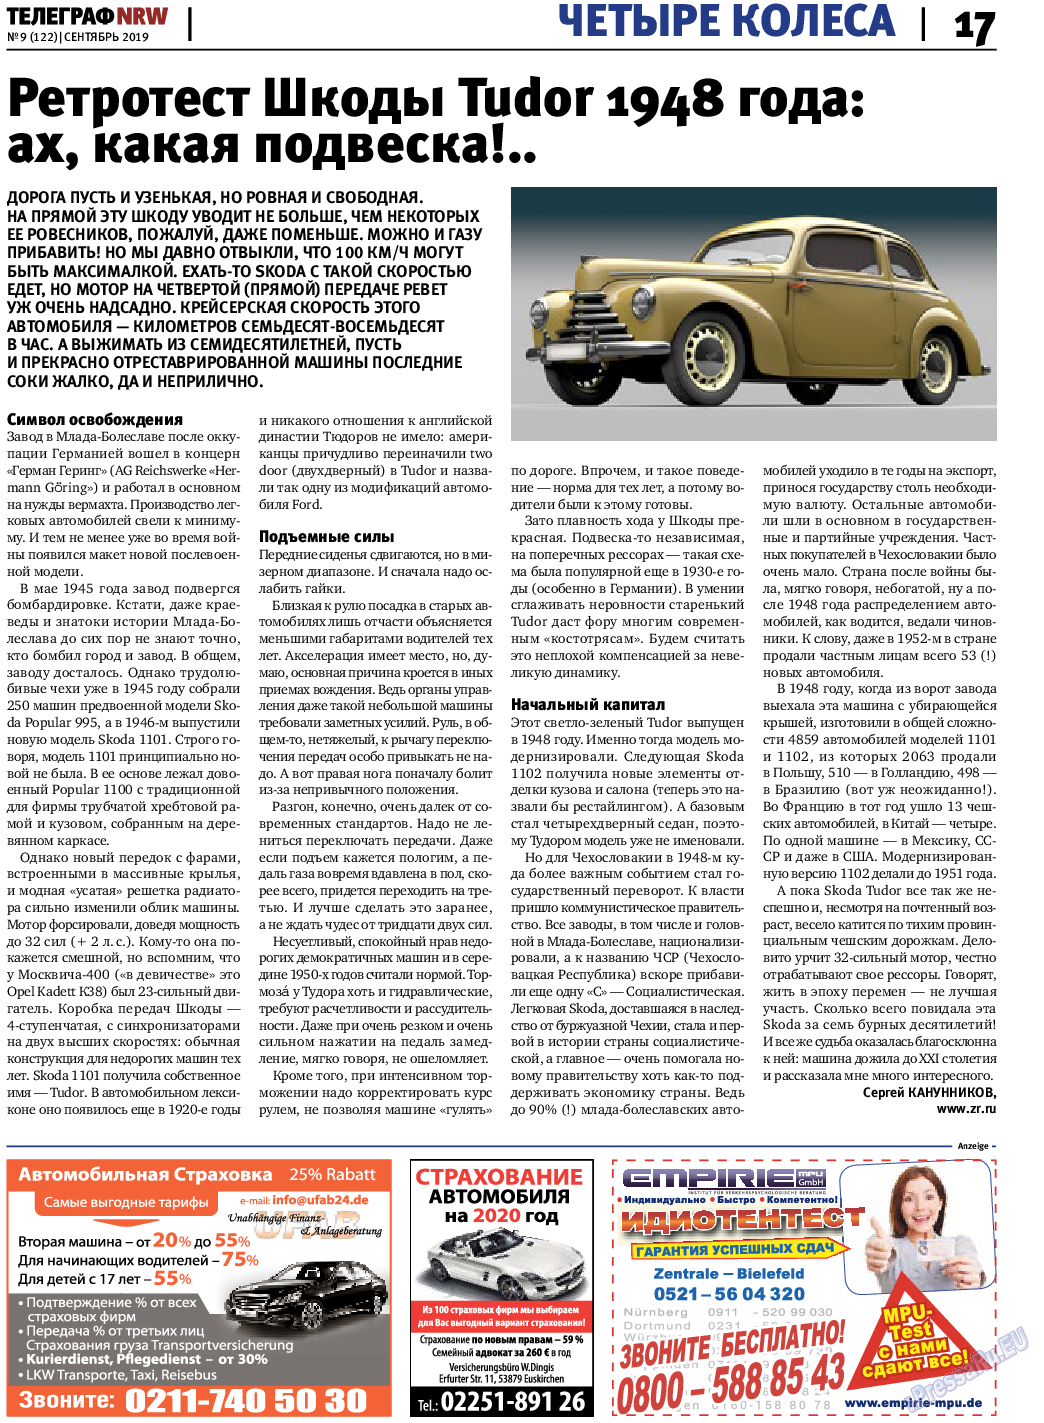 Телеграф NRW, газета. 2019 №9 стр.17